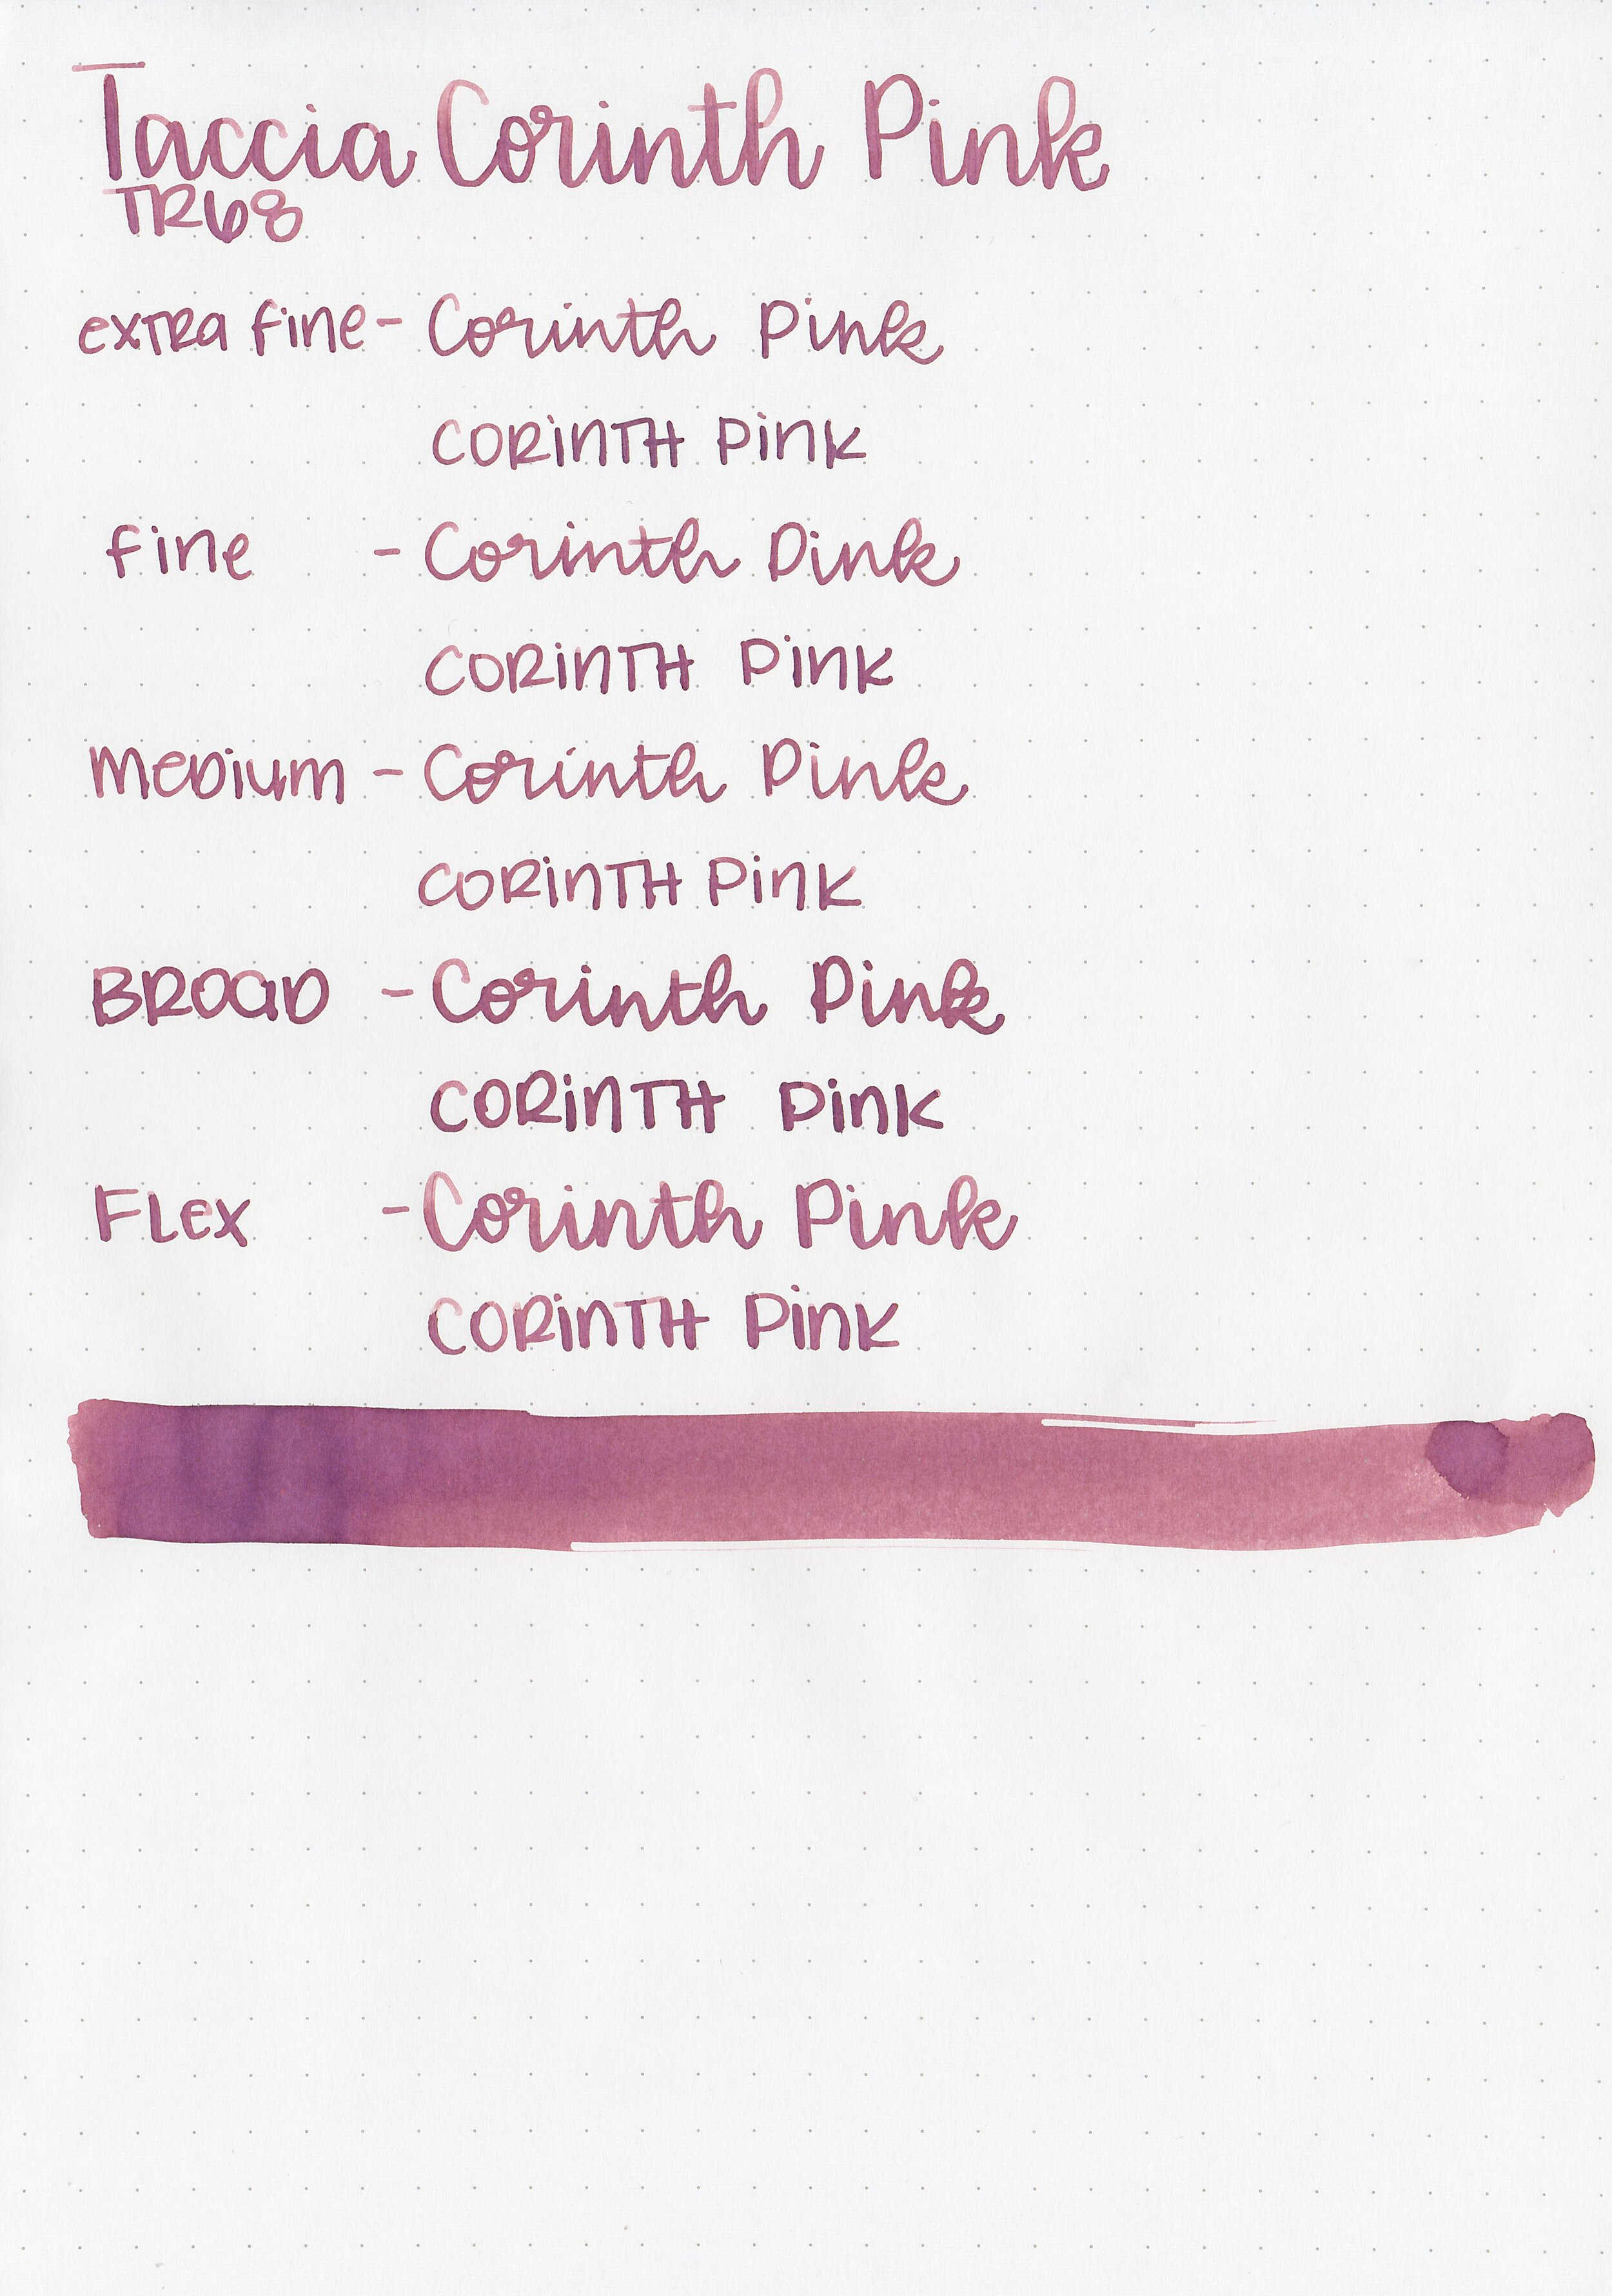 tac-corinth-pink-6.jpg